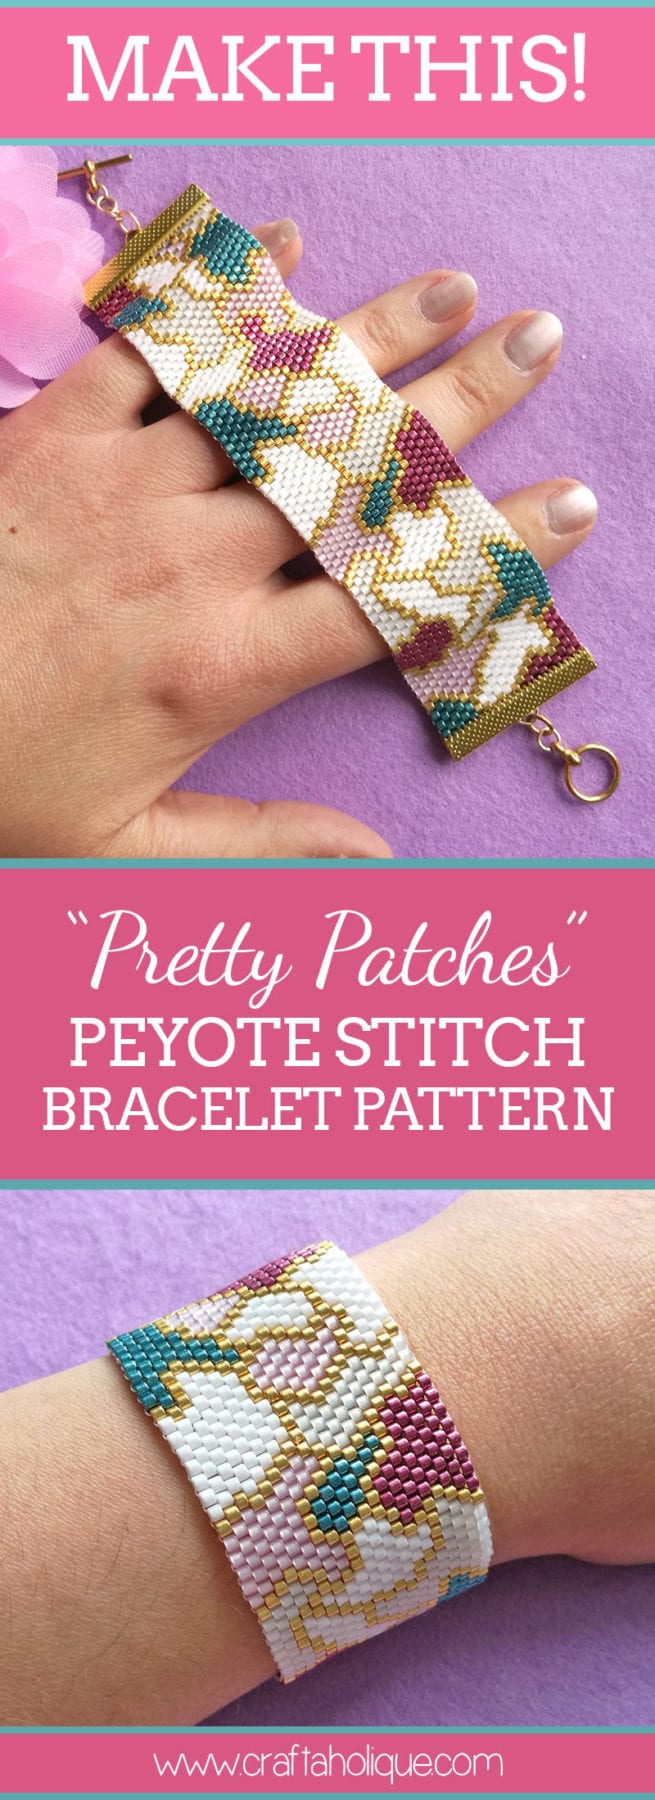 Pretty Patches Peyote Bracelet Pattern by Craftaholique